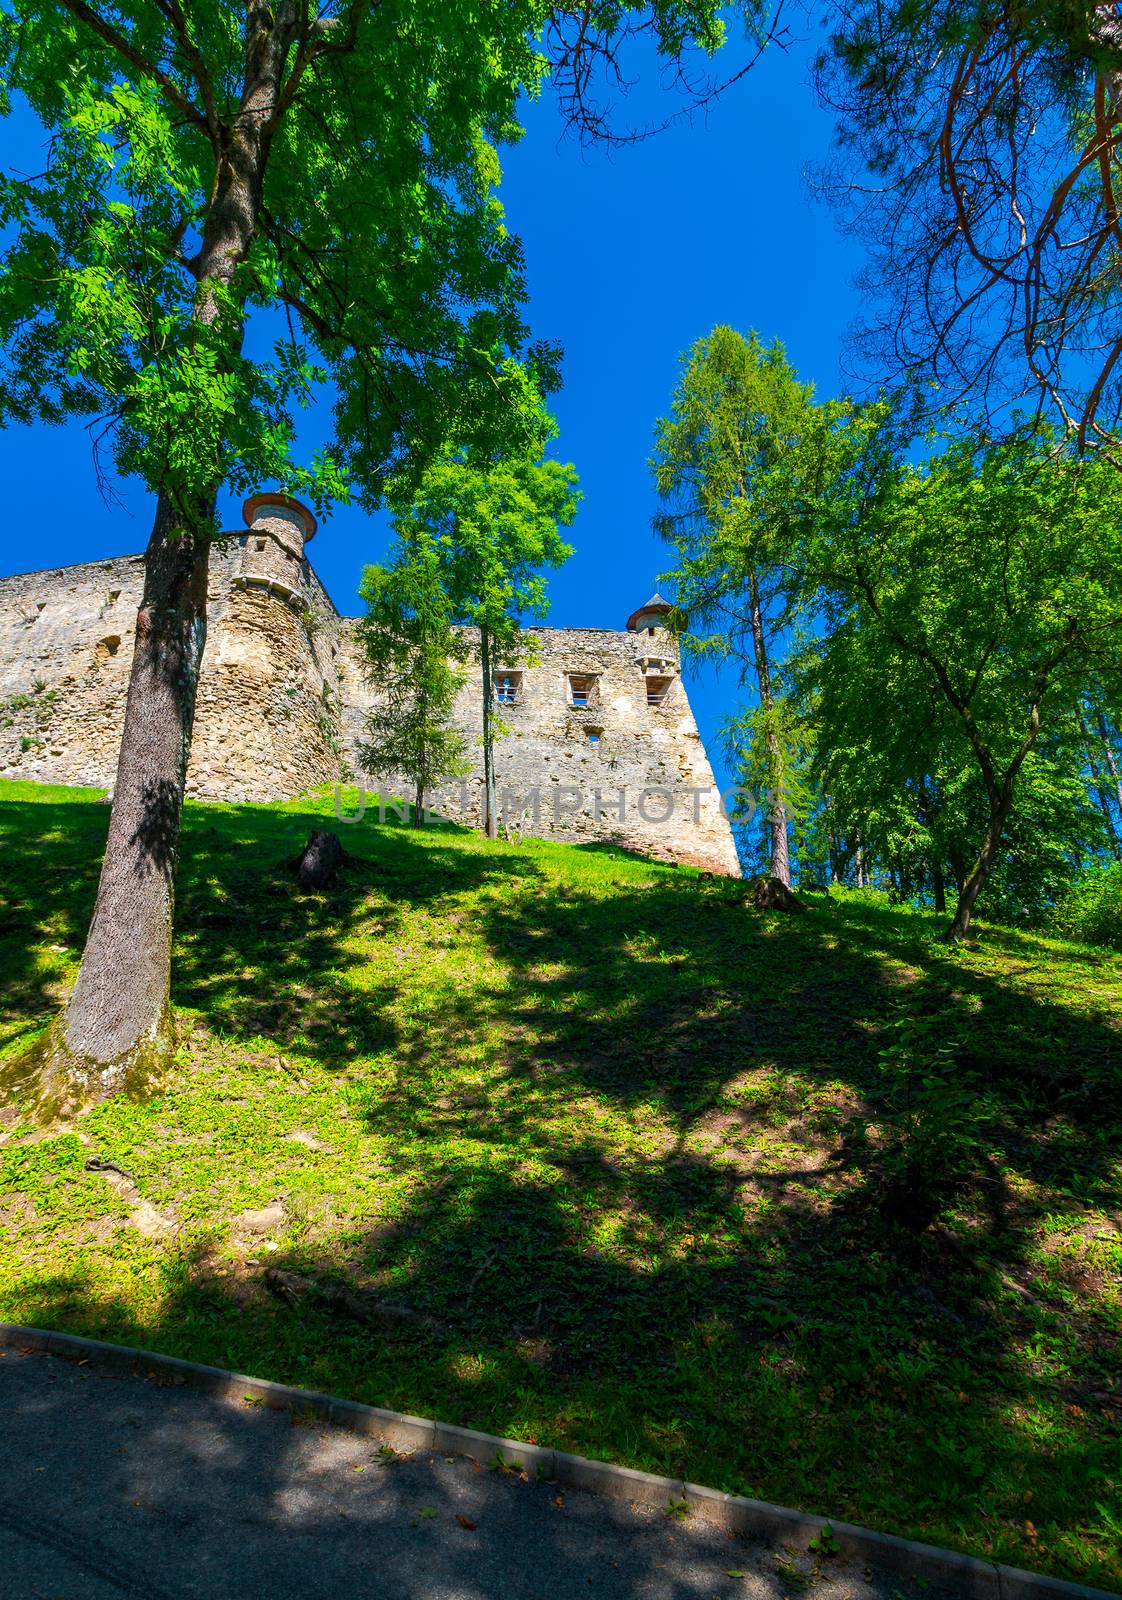 Stara Lubovna Castle of Slovakia on the hillside by Pellinni